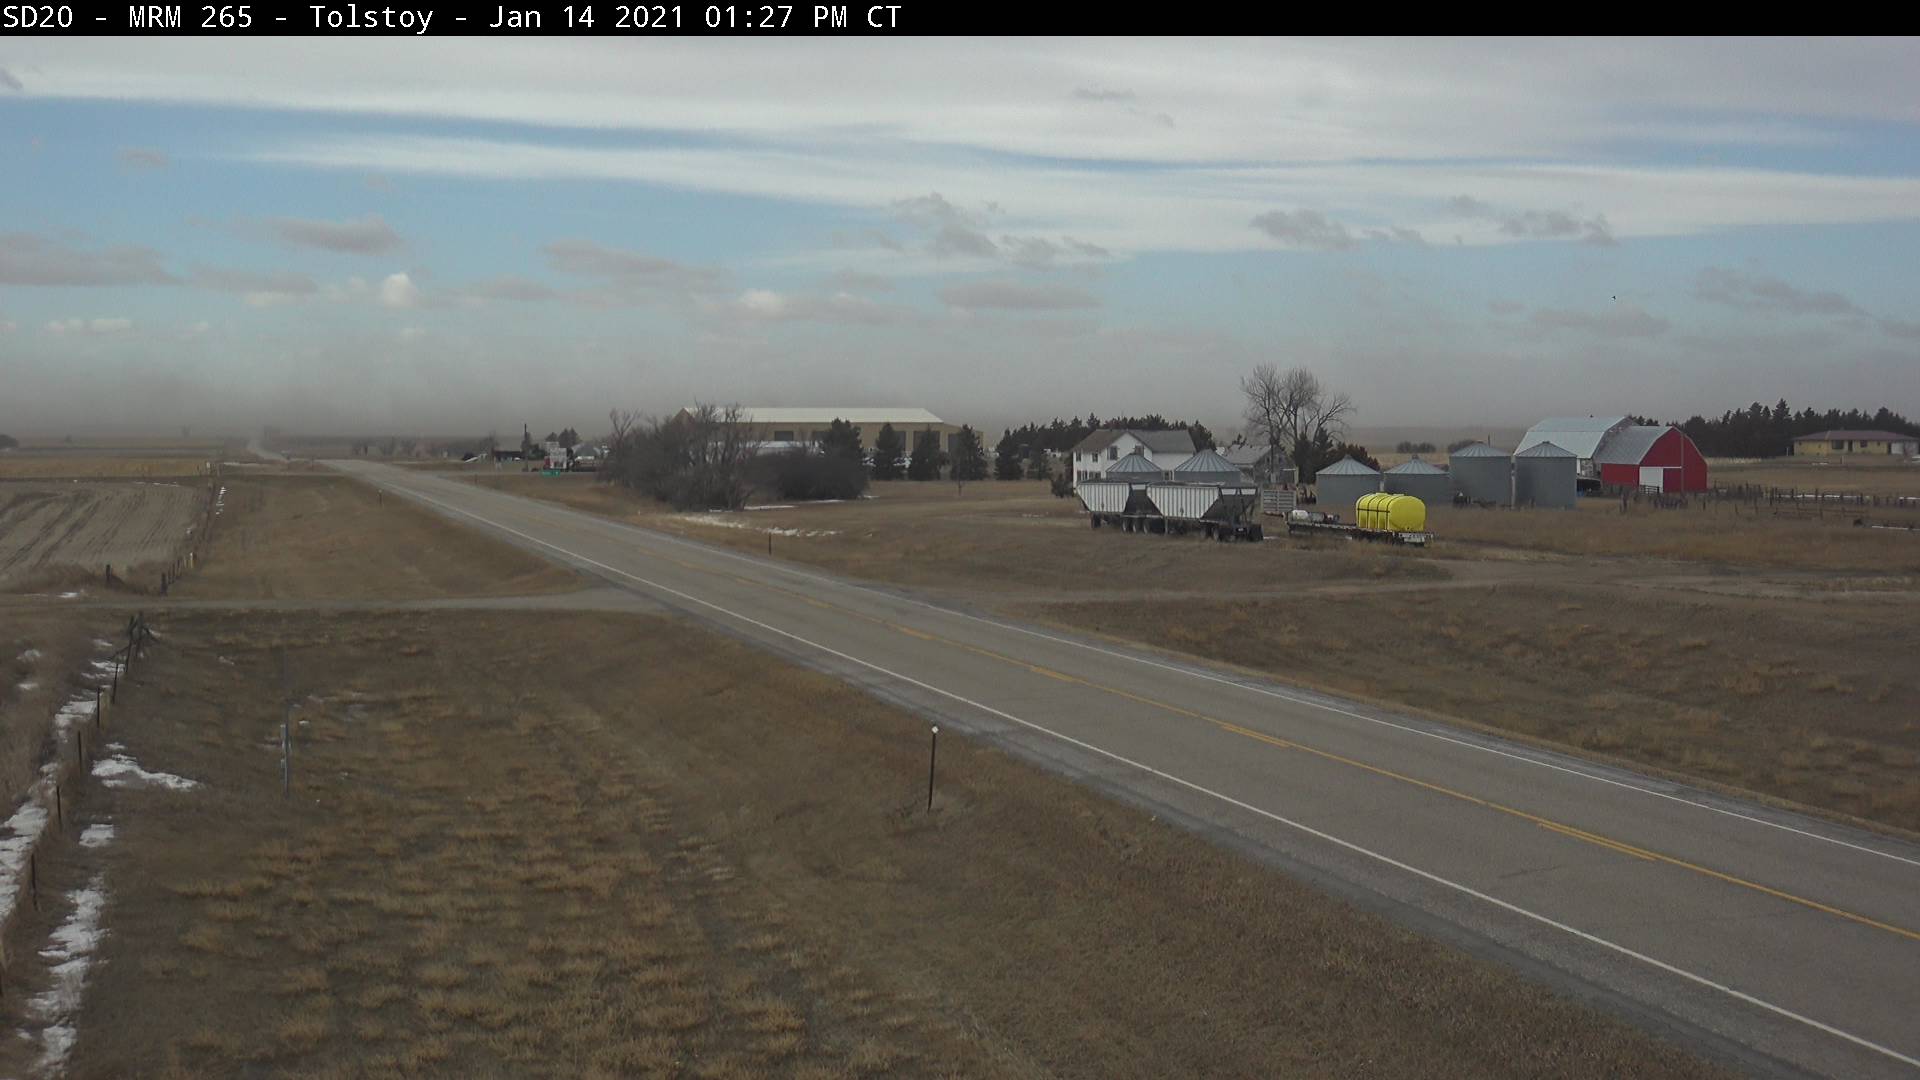 SDDOT Webcam on I-29 near Brandt, SD at 4:50 PM on 1/14/2021 (SDDOT)